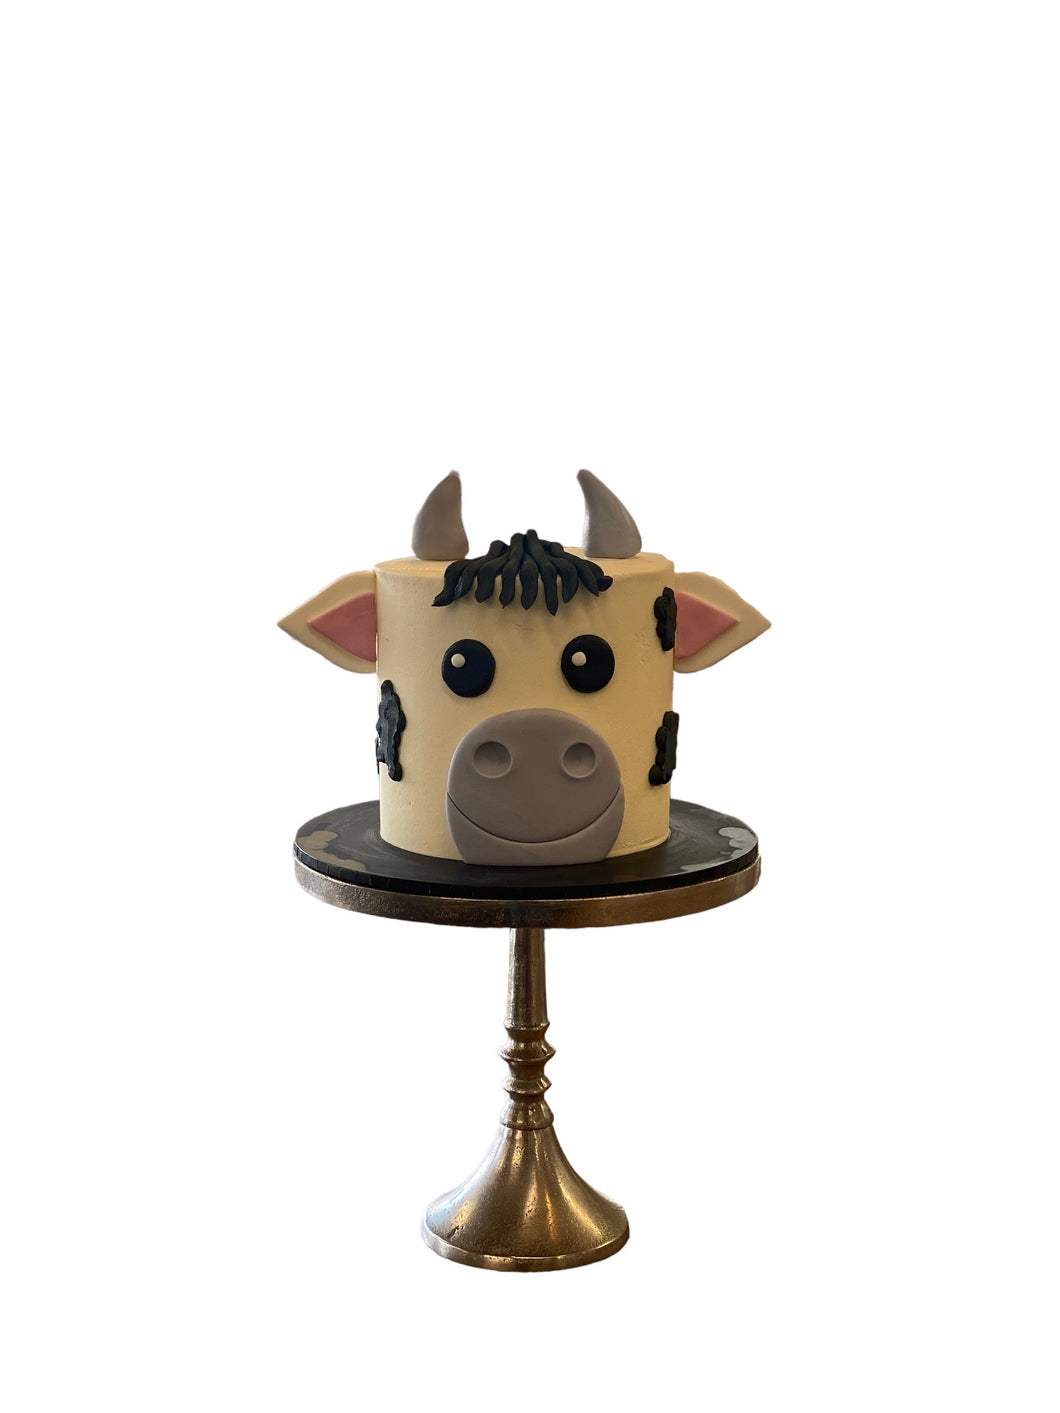 Adorable Cow Cake | Cute Cow Cake | Farm Animal Cake - YouTube